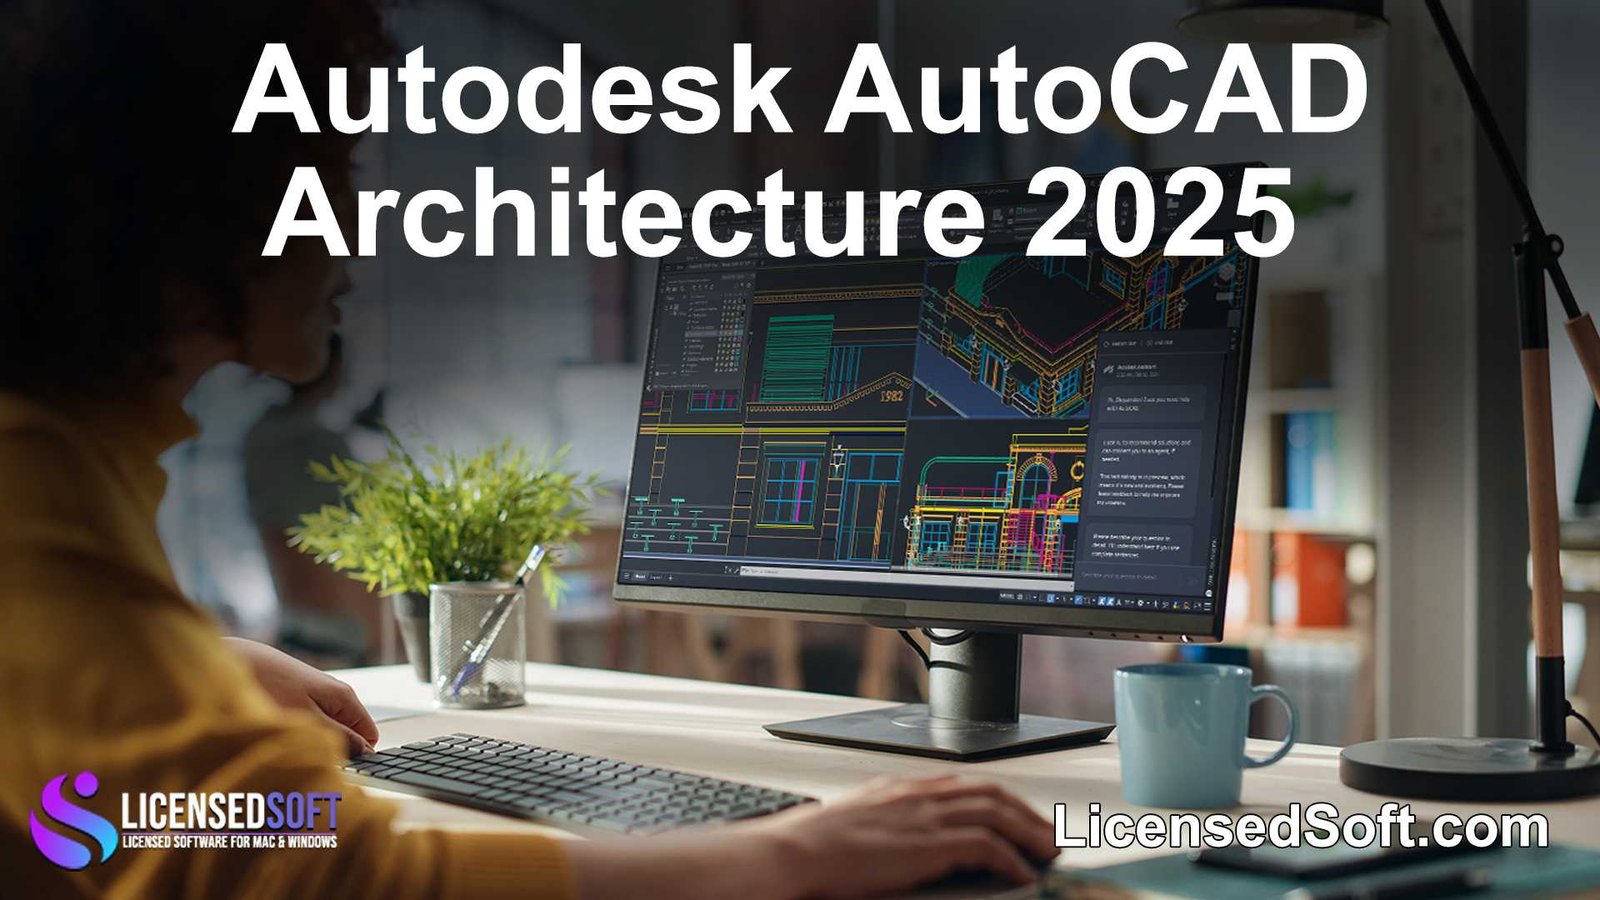 Autodesk AutoCAD Architecture 2025 By LicensedSoft